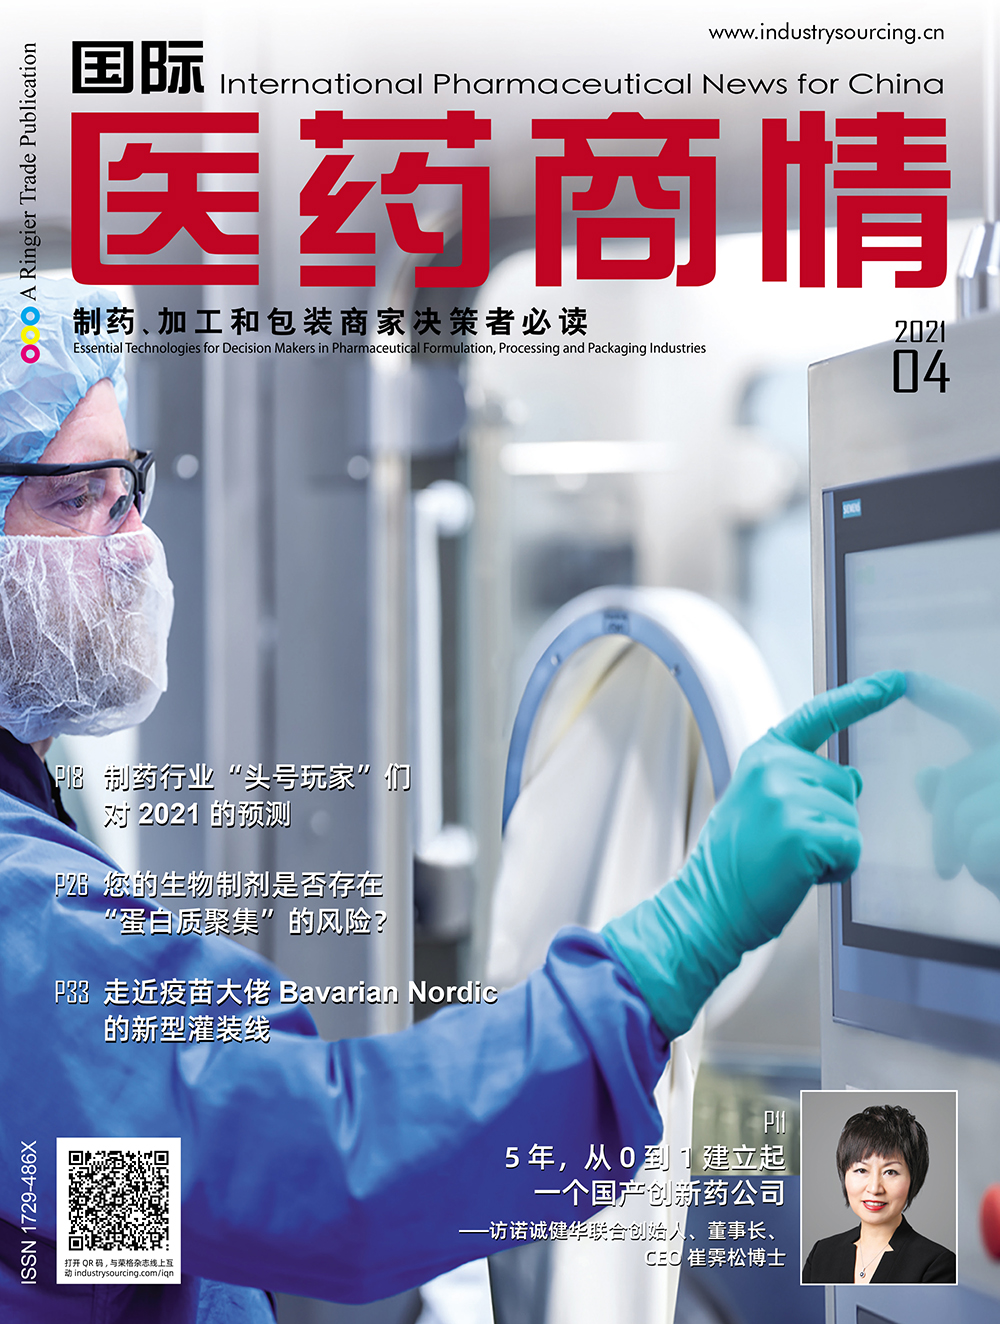 International Pharmaceutical News for China